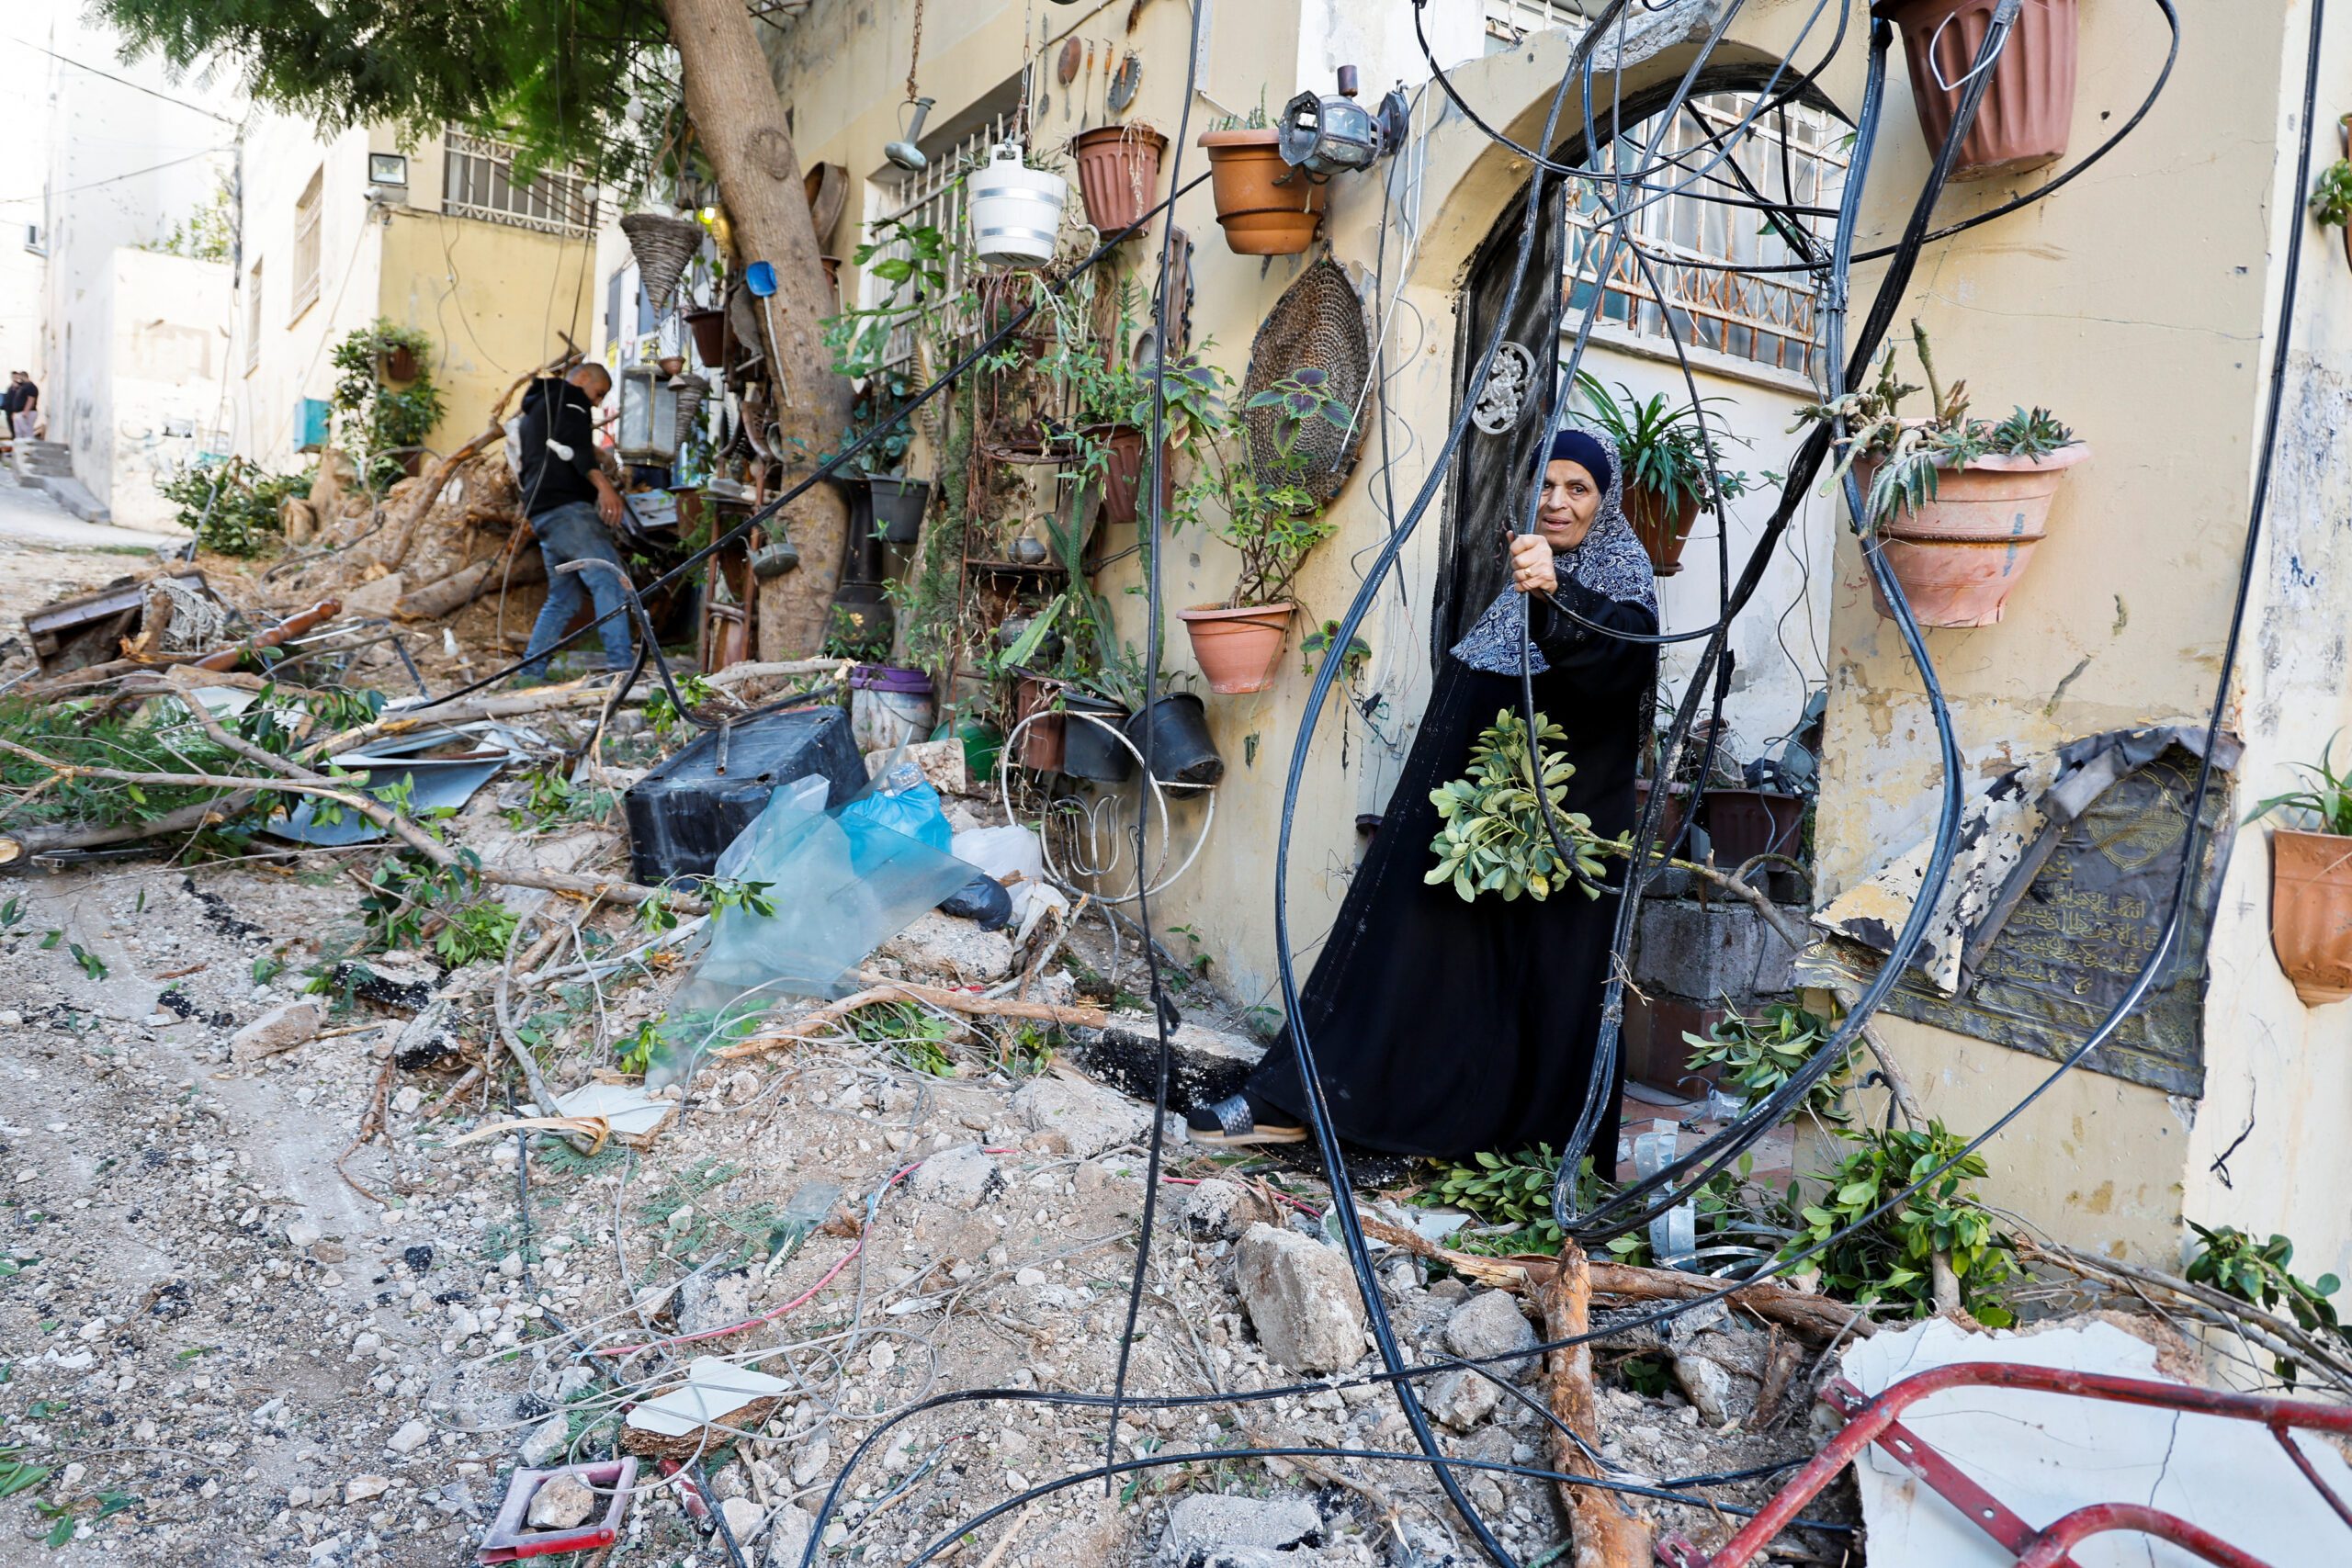 UN report deplores ‘rapid deterioration’ of rights in West Bank